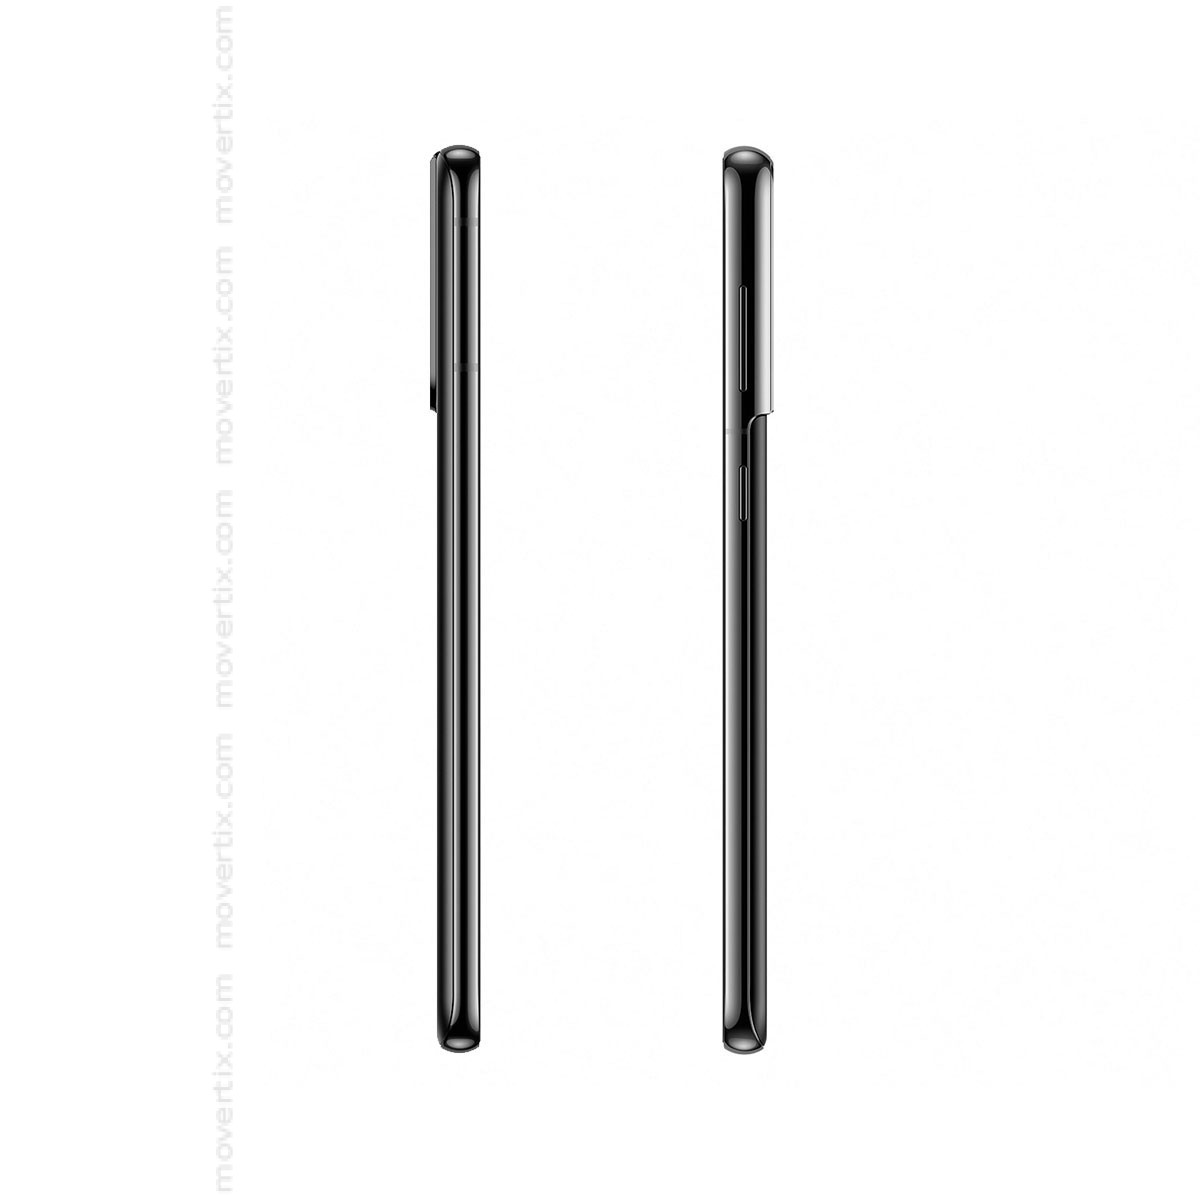 Samsung Galaxy S21 5g Phantom Black 256gb And 8gb Ram Sm G996b Movertix Mobile Phones Shop